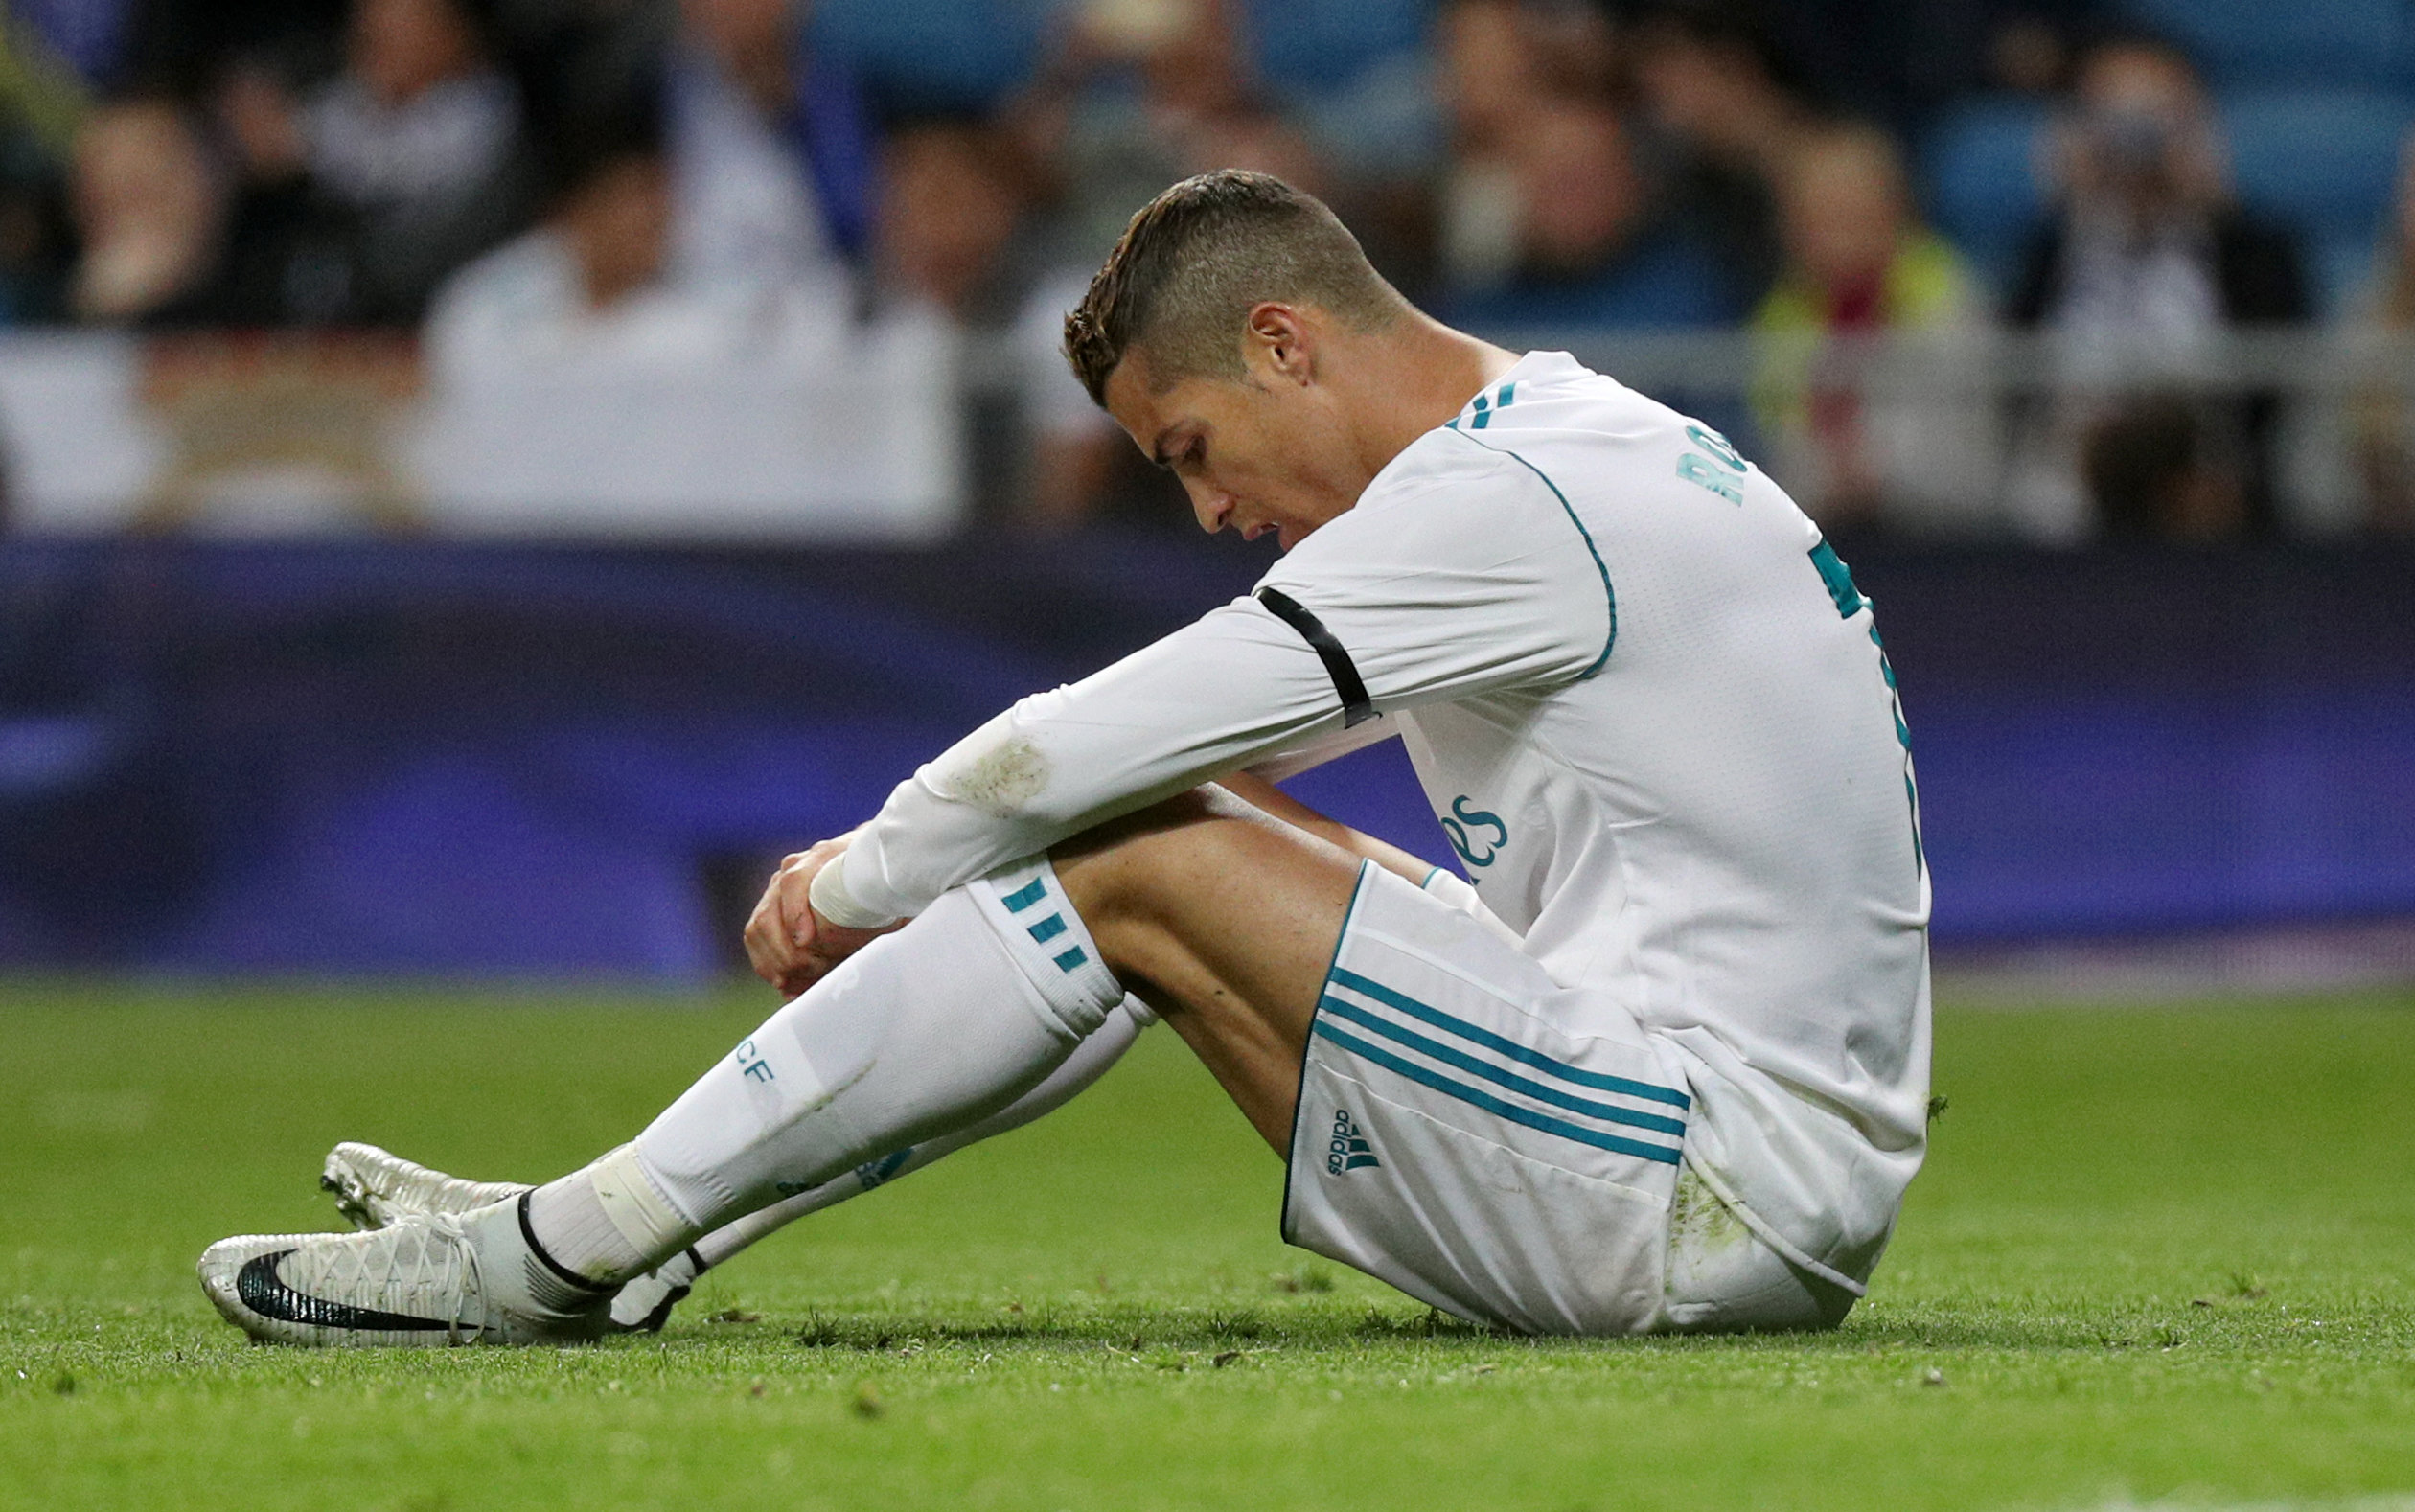 Football: Real Madrid’s misfiring strikers cause concern